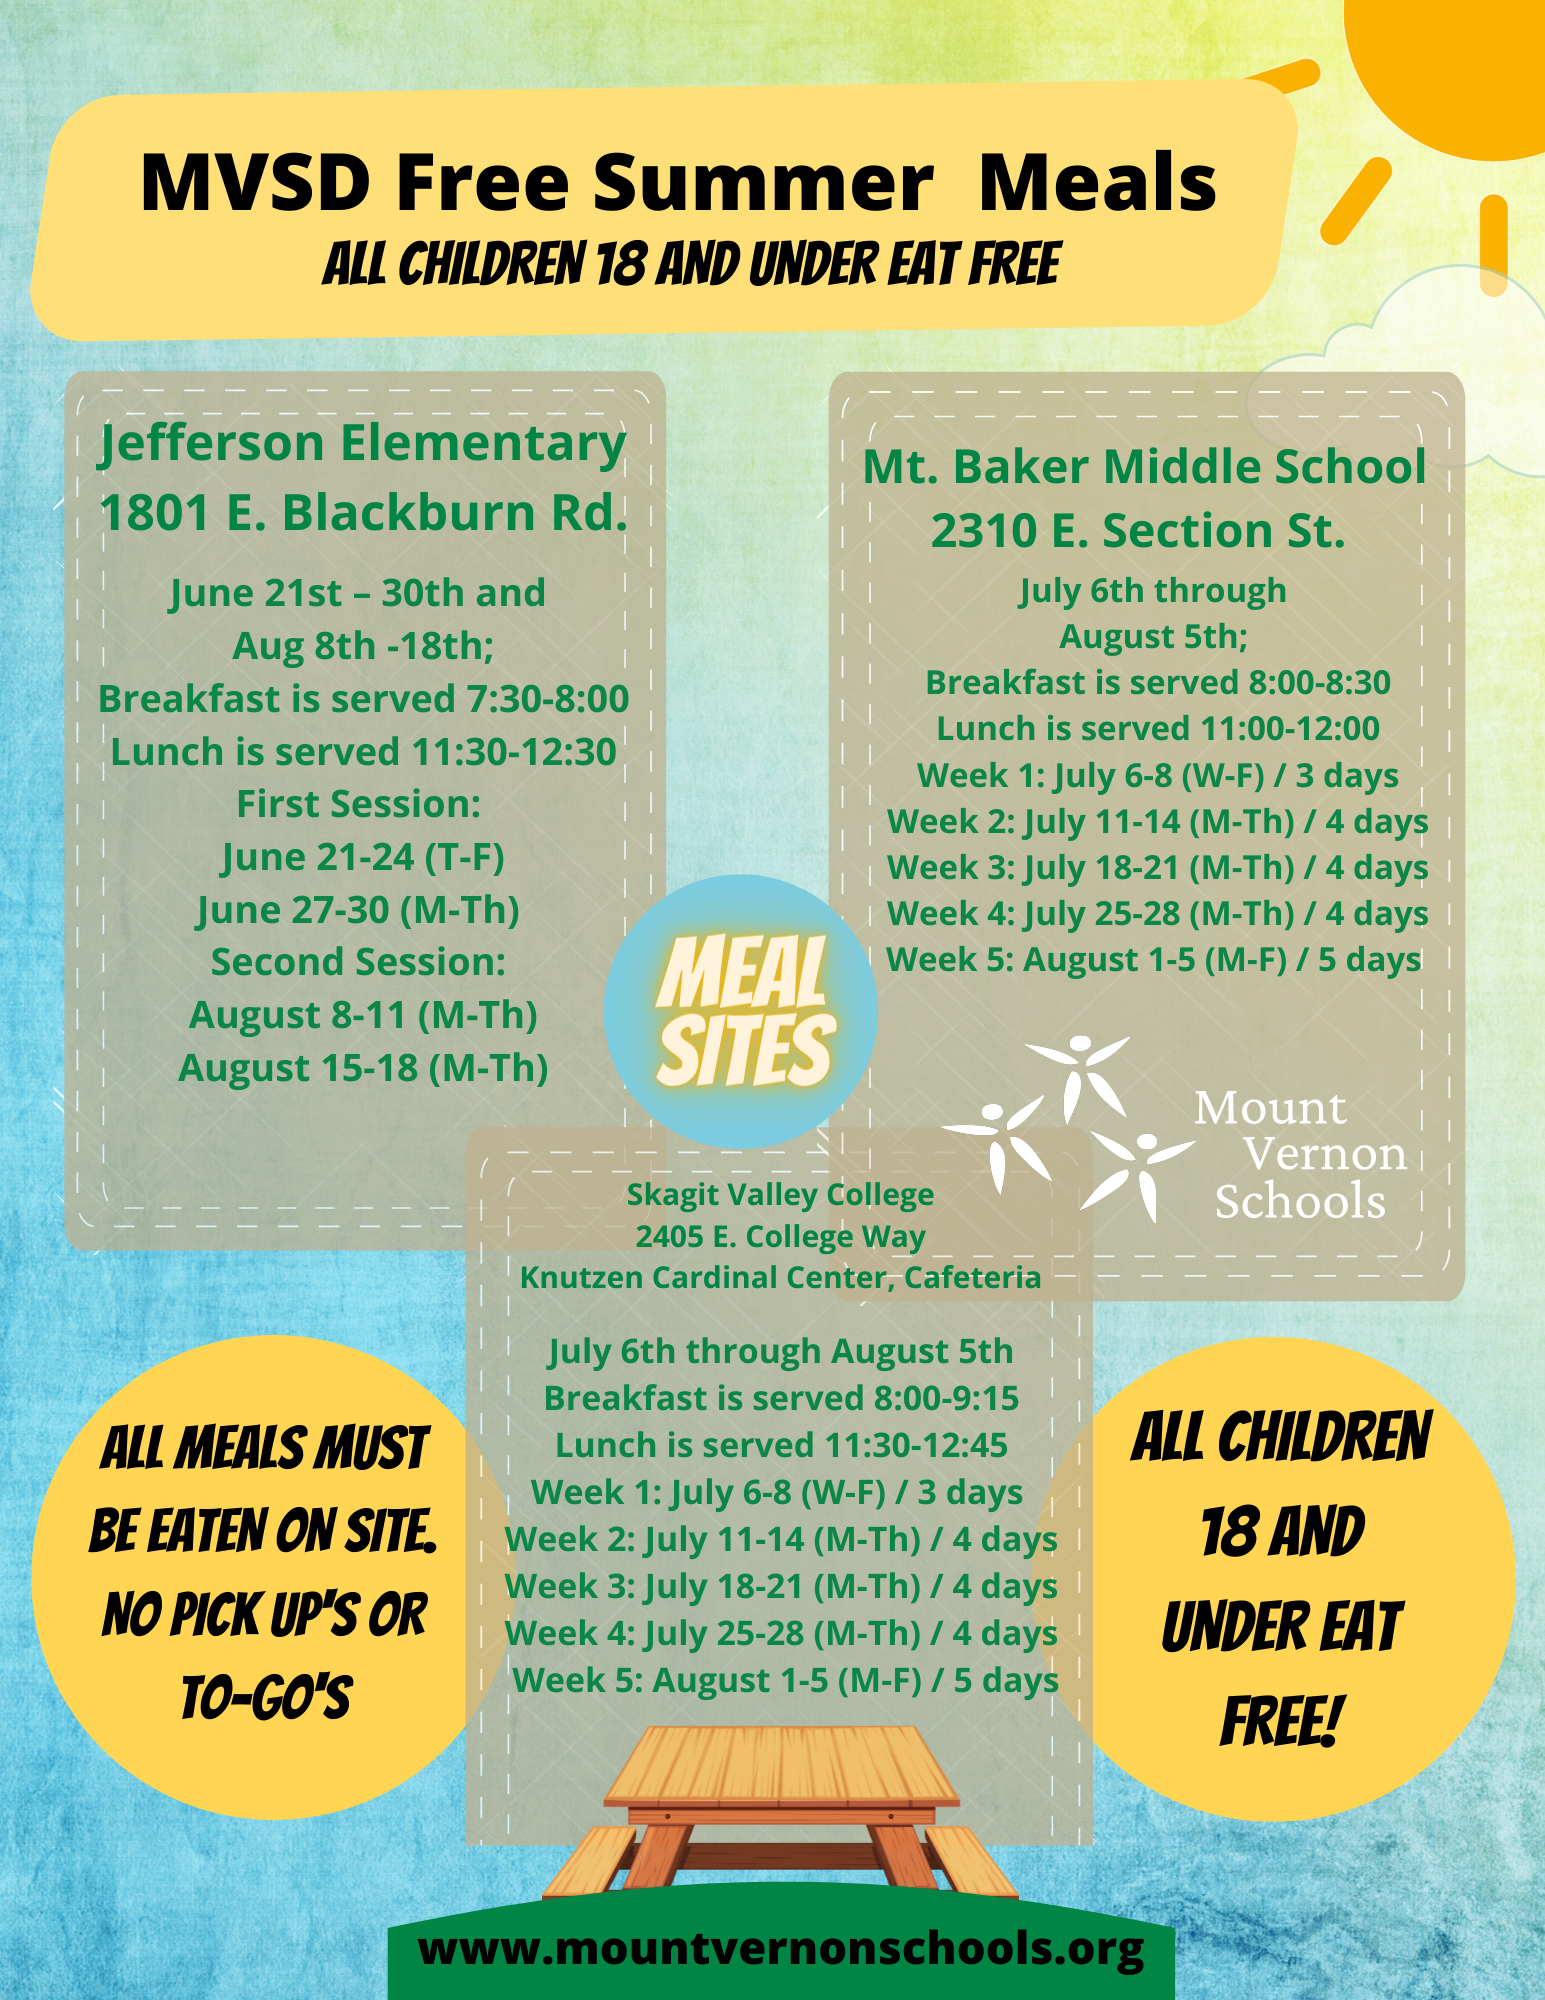 Flyer for the MVSD Free Summer Meals Program.